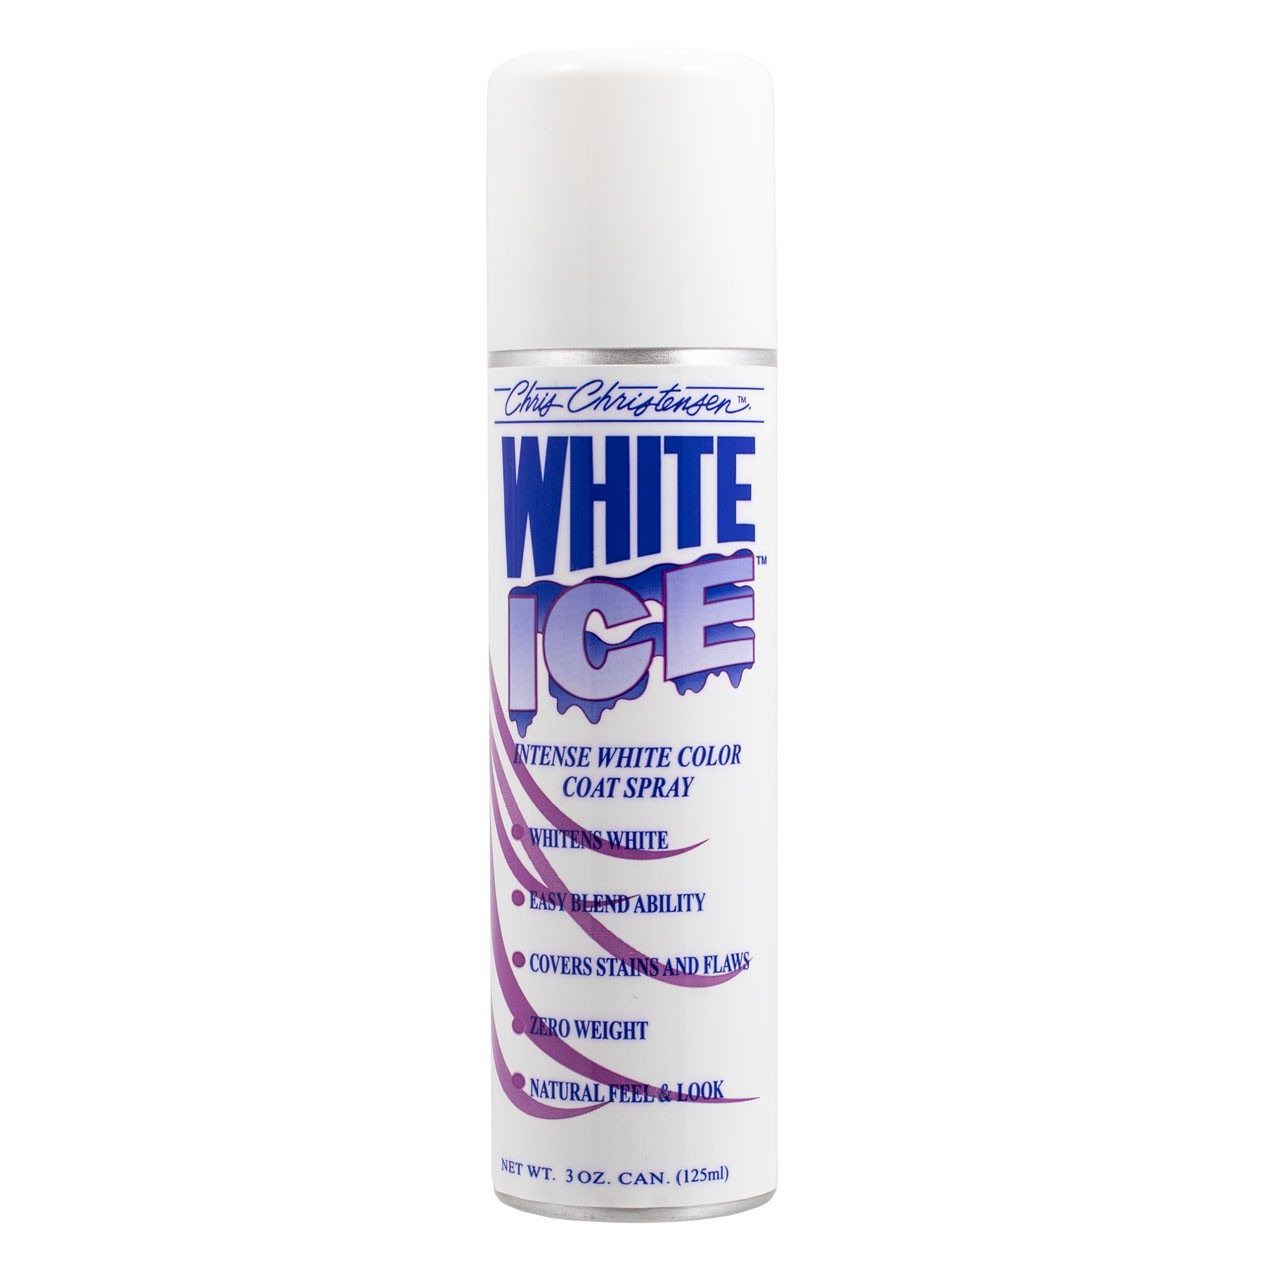 CC - White Ice Spray